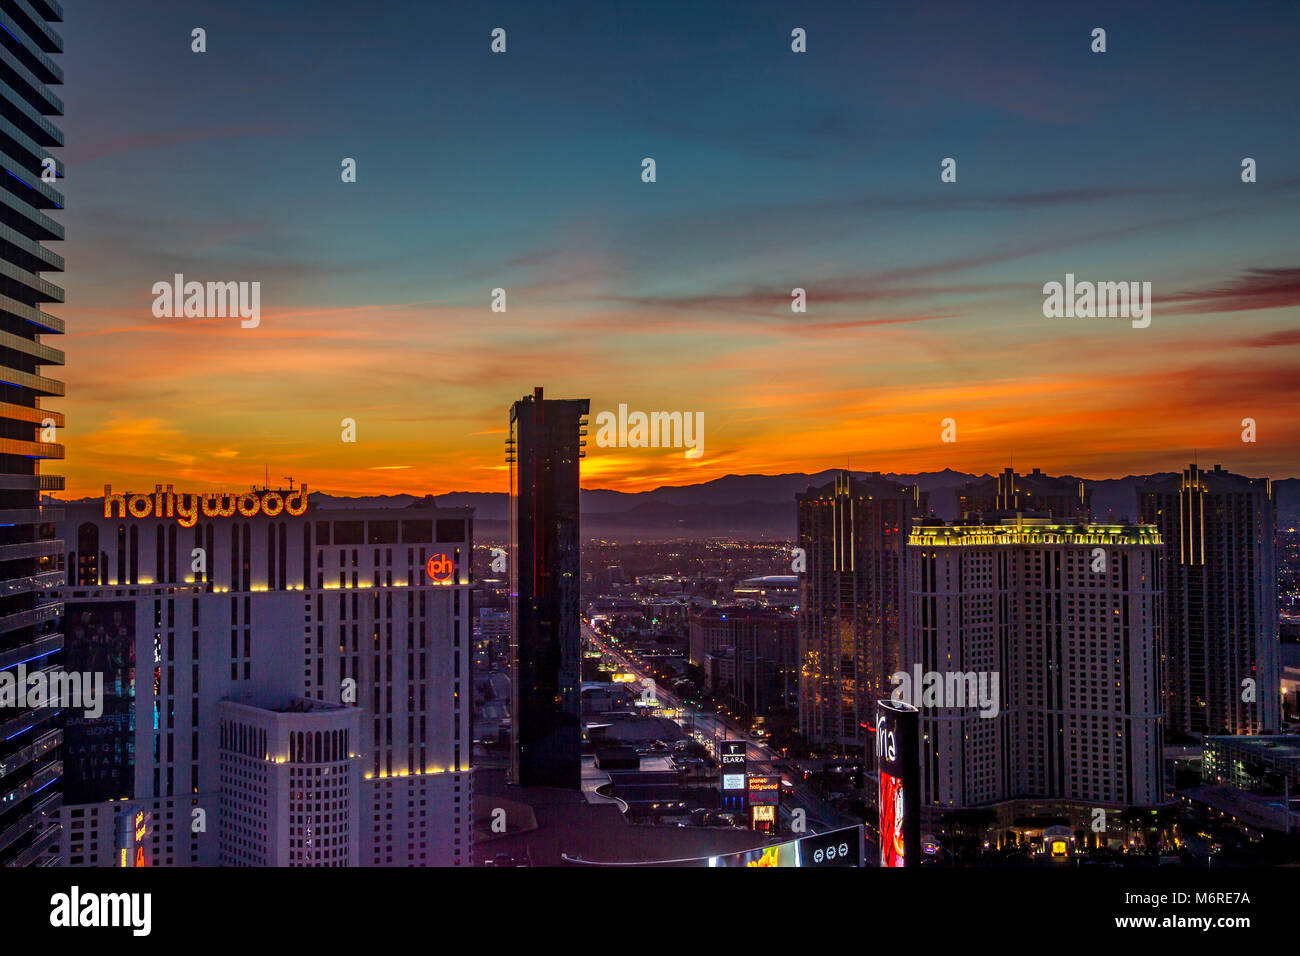 Las Vegas City Skyline Silhouette Stockfotos und -bilder Kaufen - Alamy